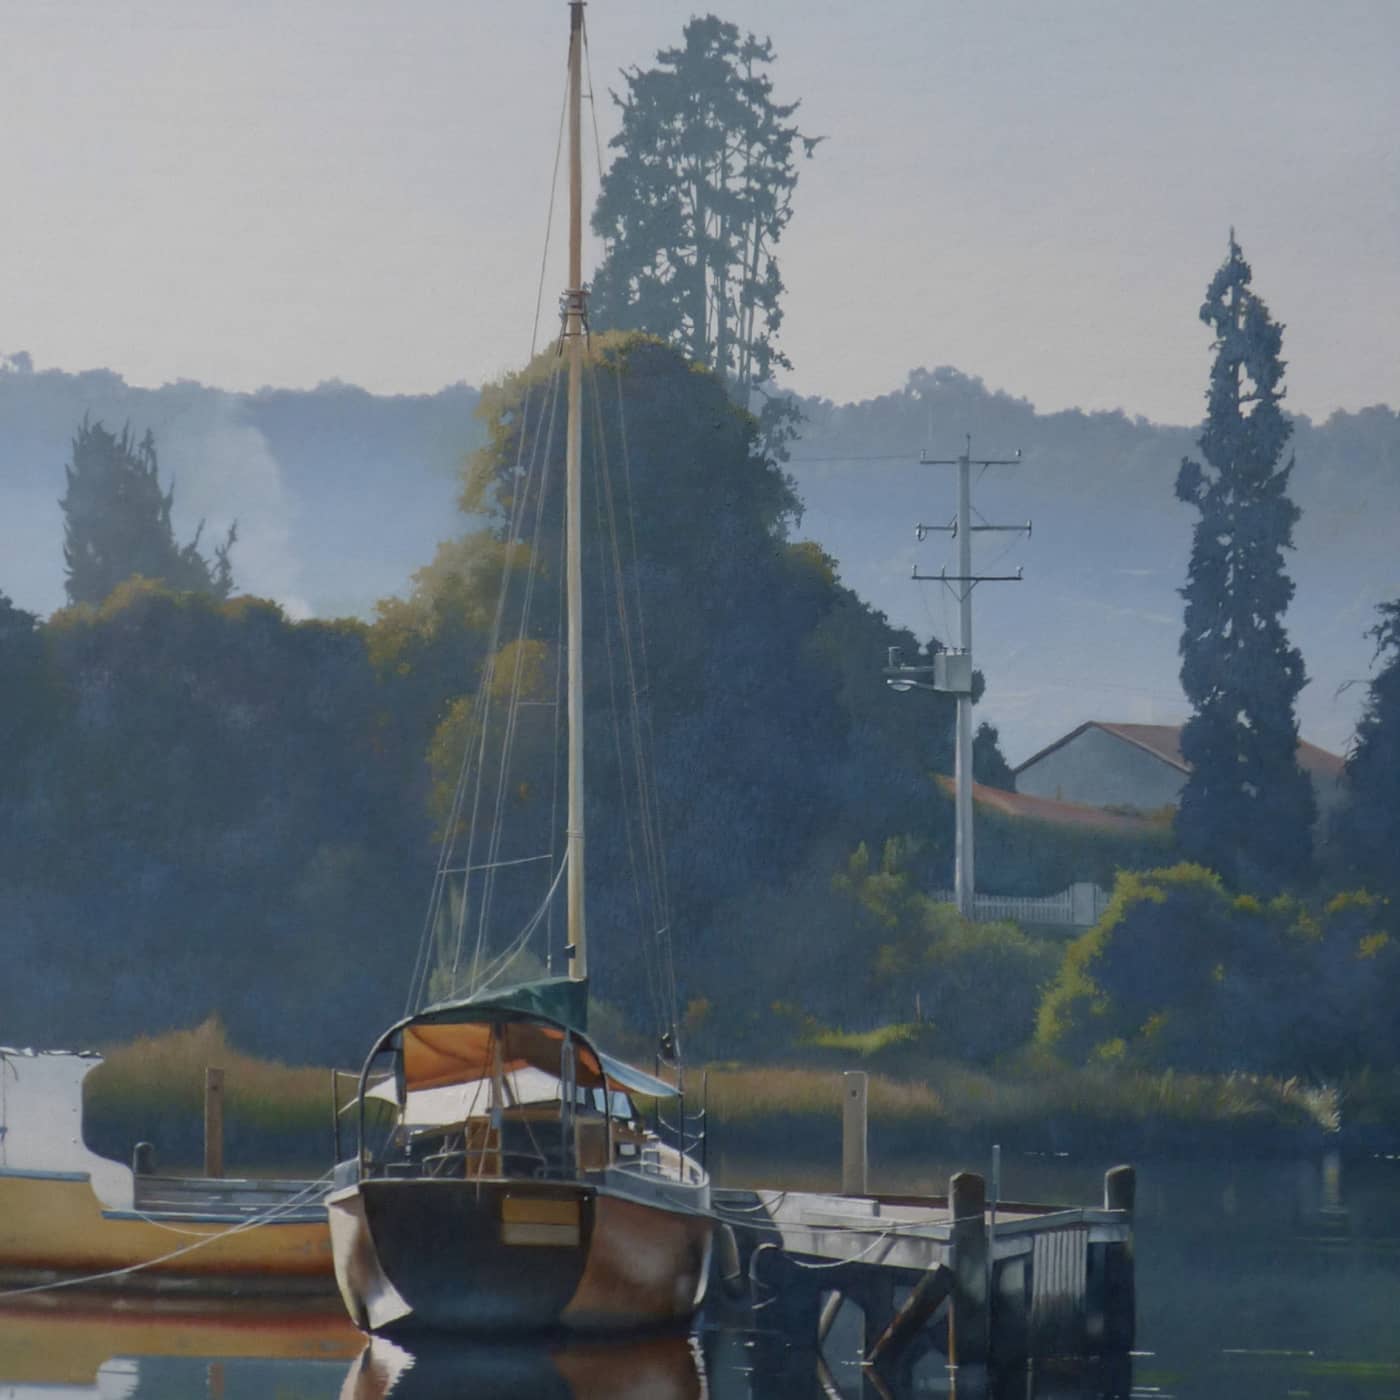 Peninsula-Based Australian Artist Jim Stagg Painting ~ 'The Huon River at Franklin' - Curate Art & Design Gallery Sorrento Mornington Peninsula Melbourne